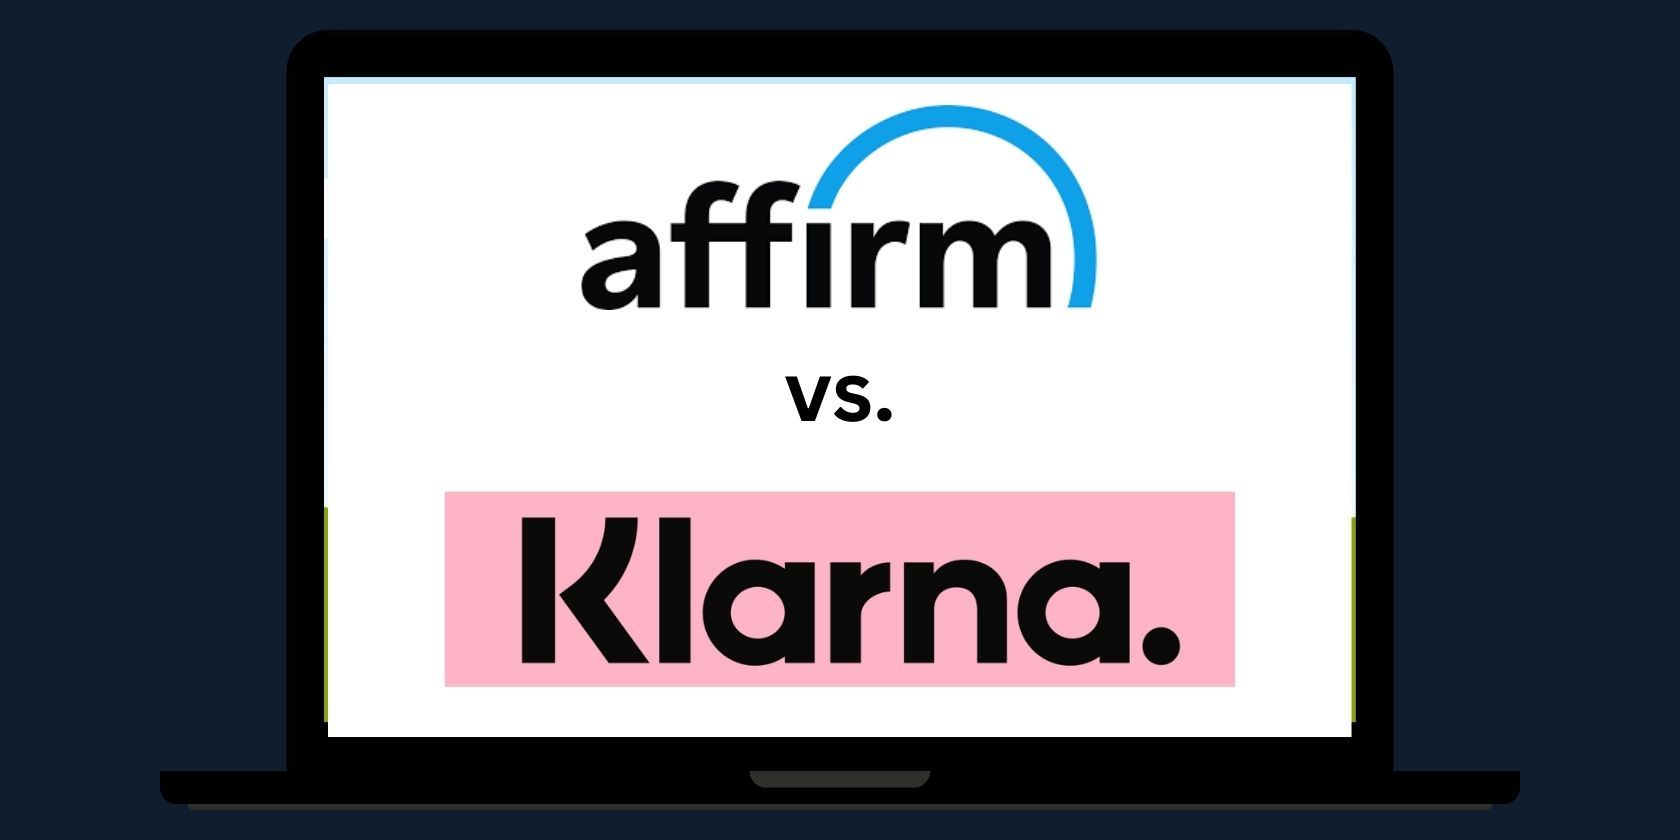 Affirm and Klarna logos on a mocked up laptop